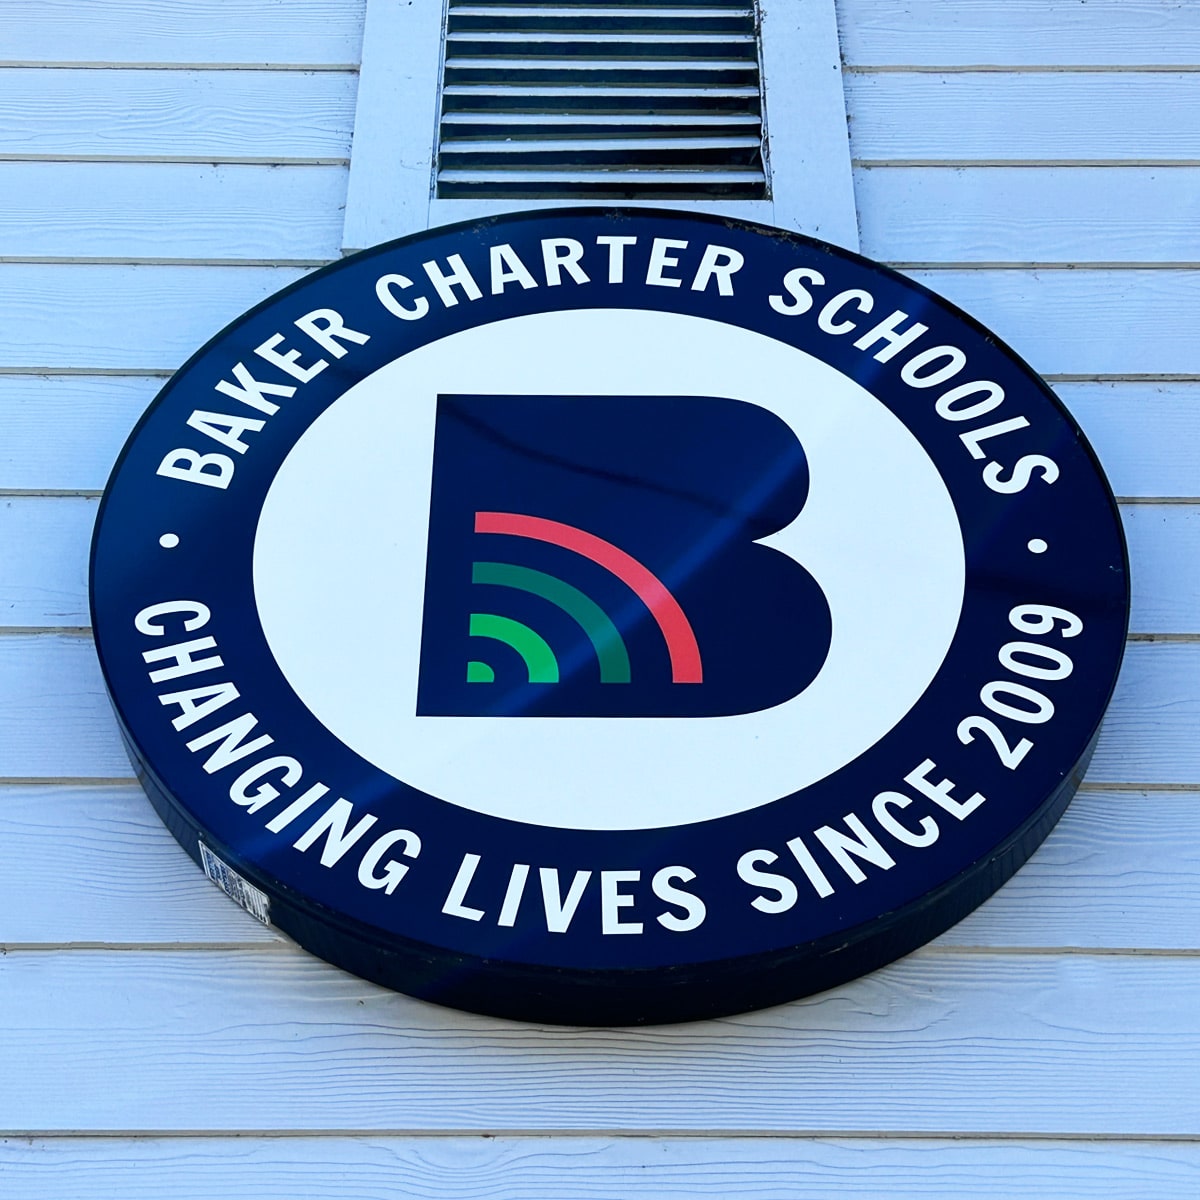 Baker Charter School building sign.